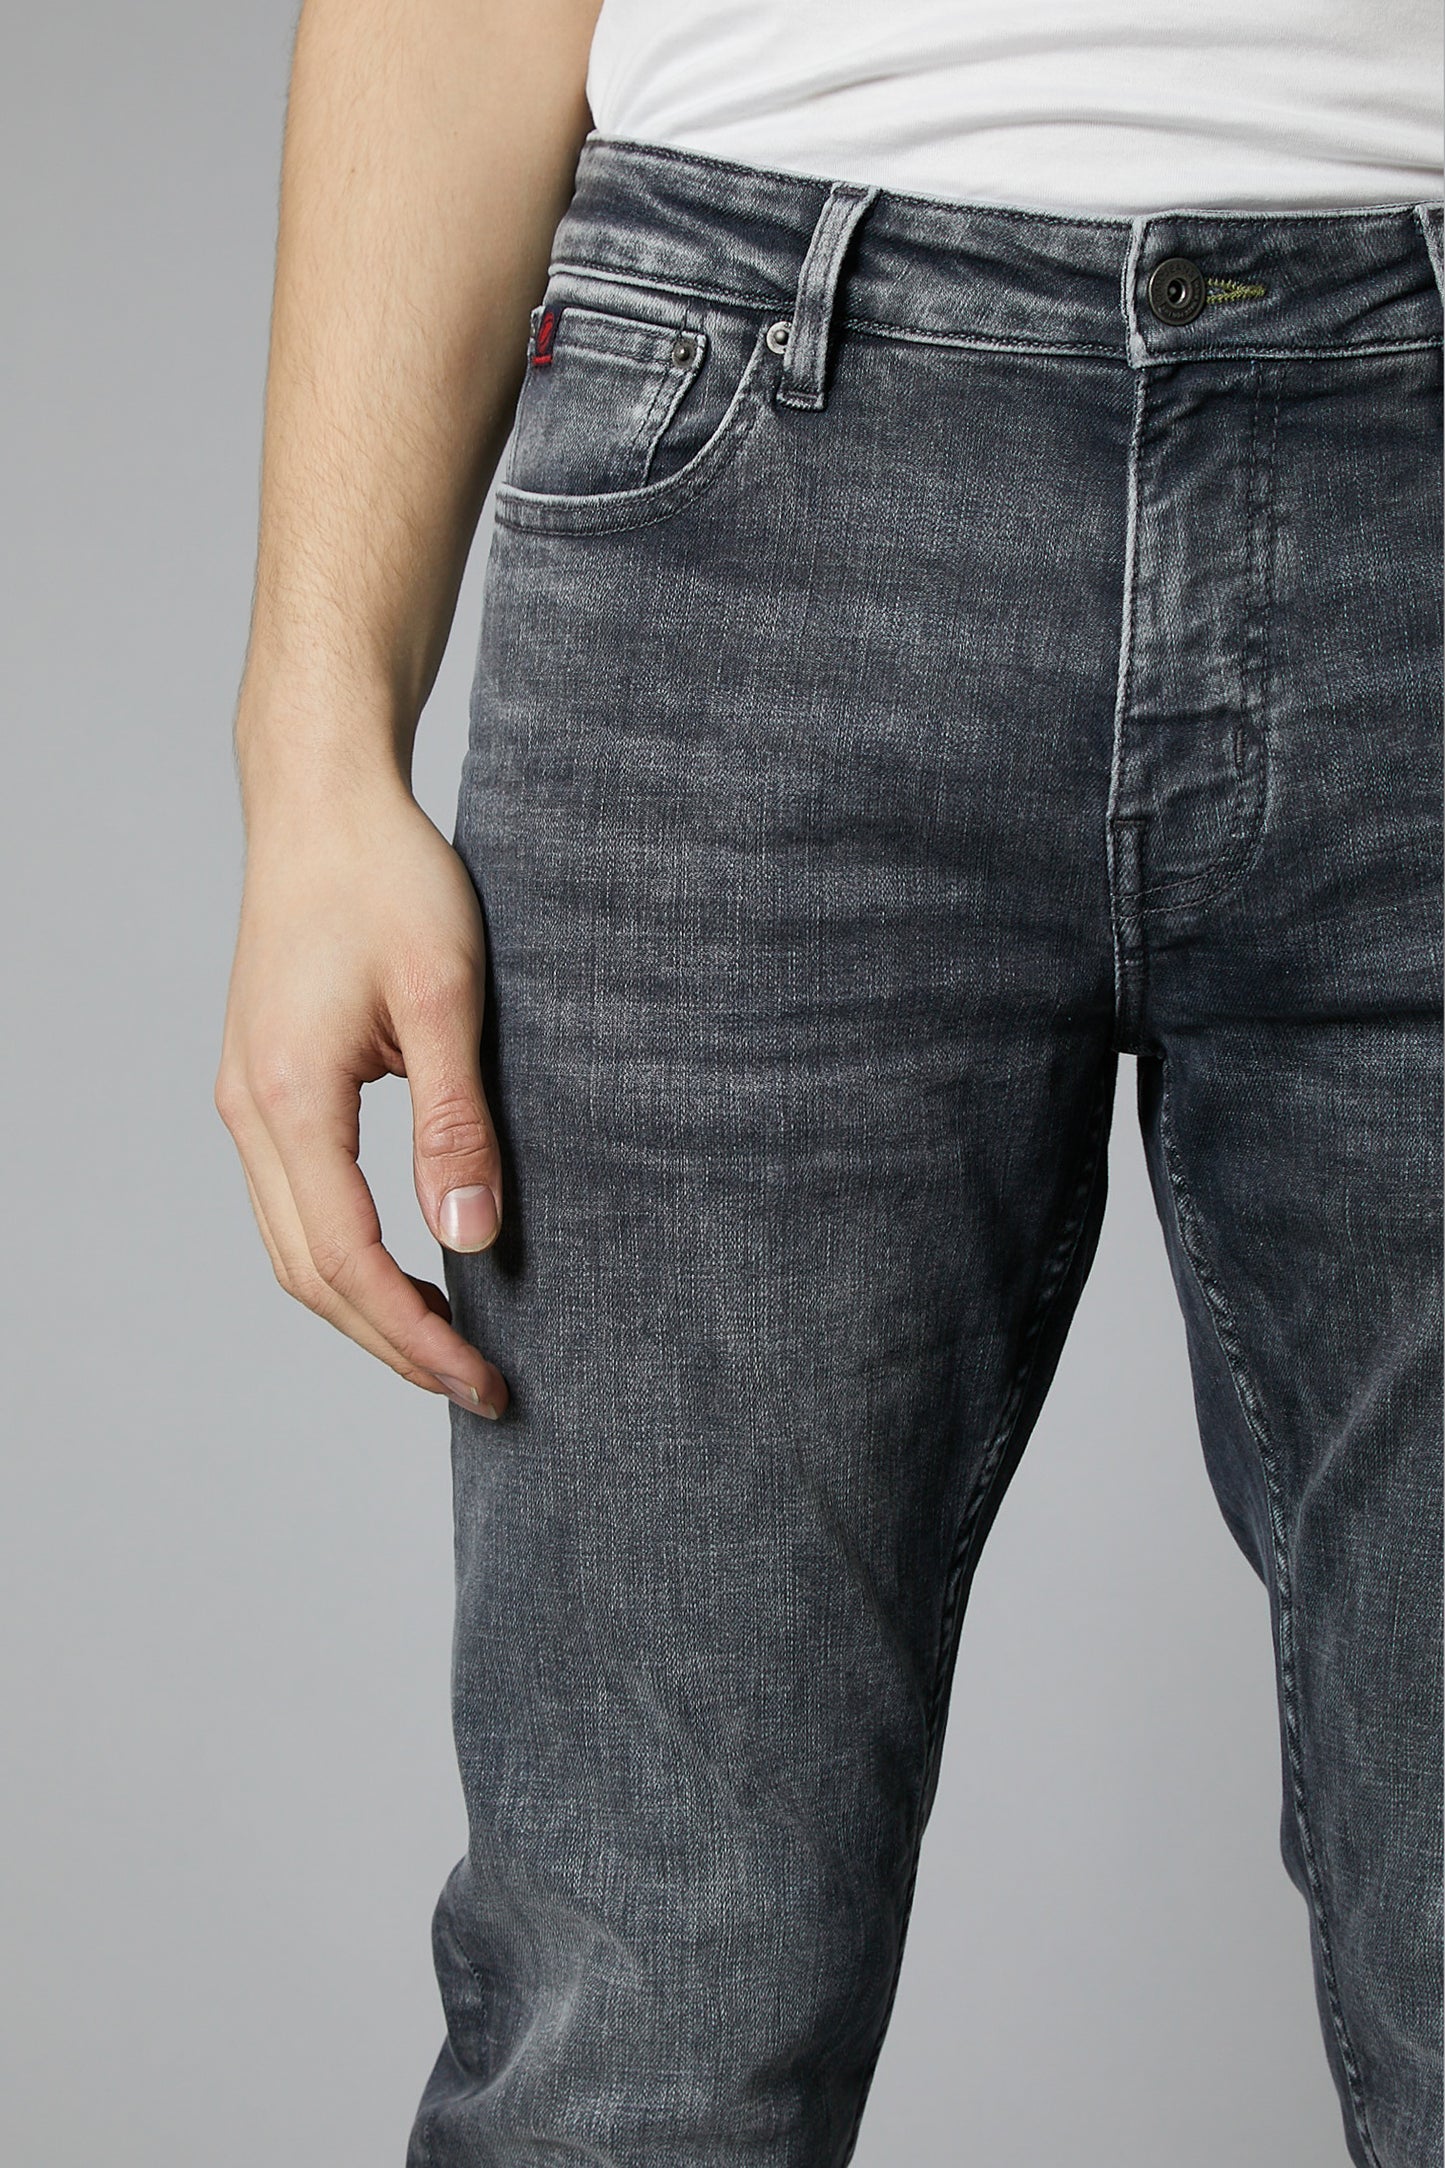 DML Jeans Alaska mens grey straight leg denim jeans close up